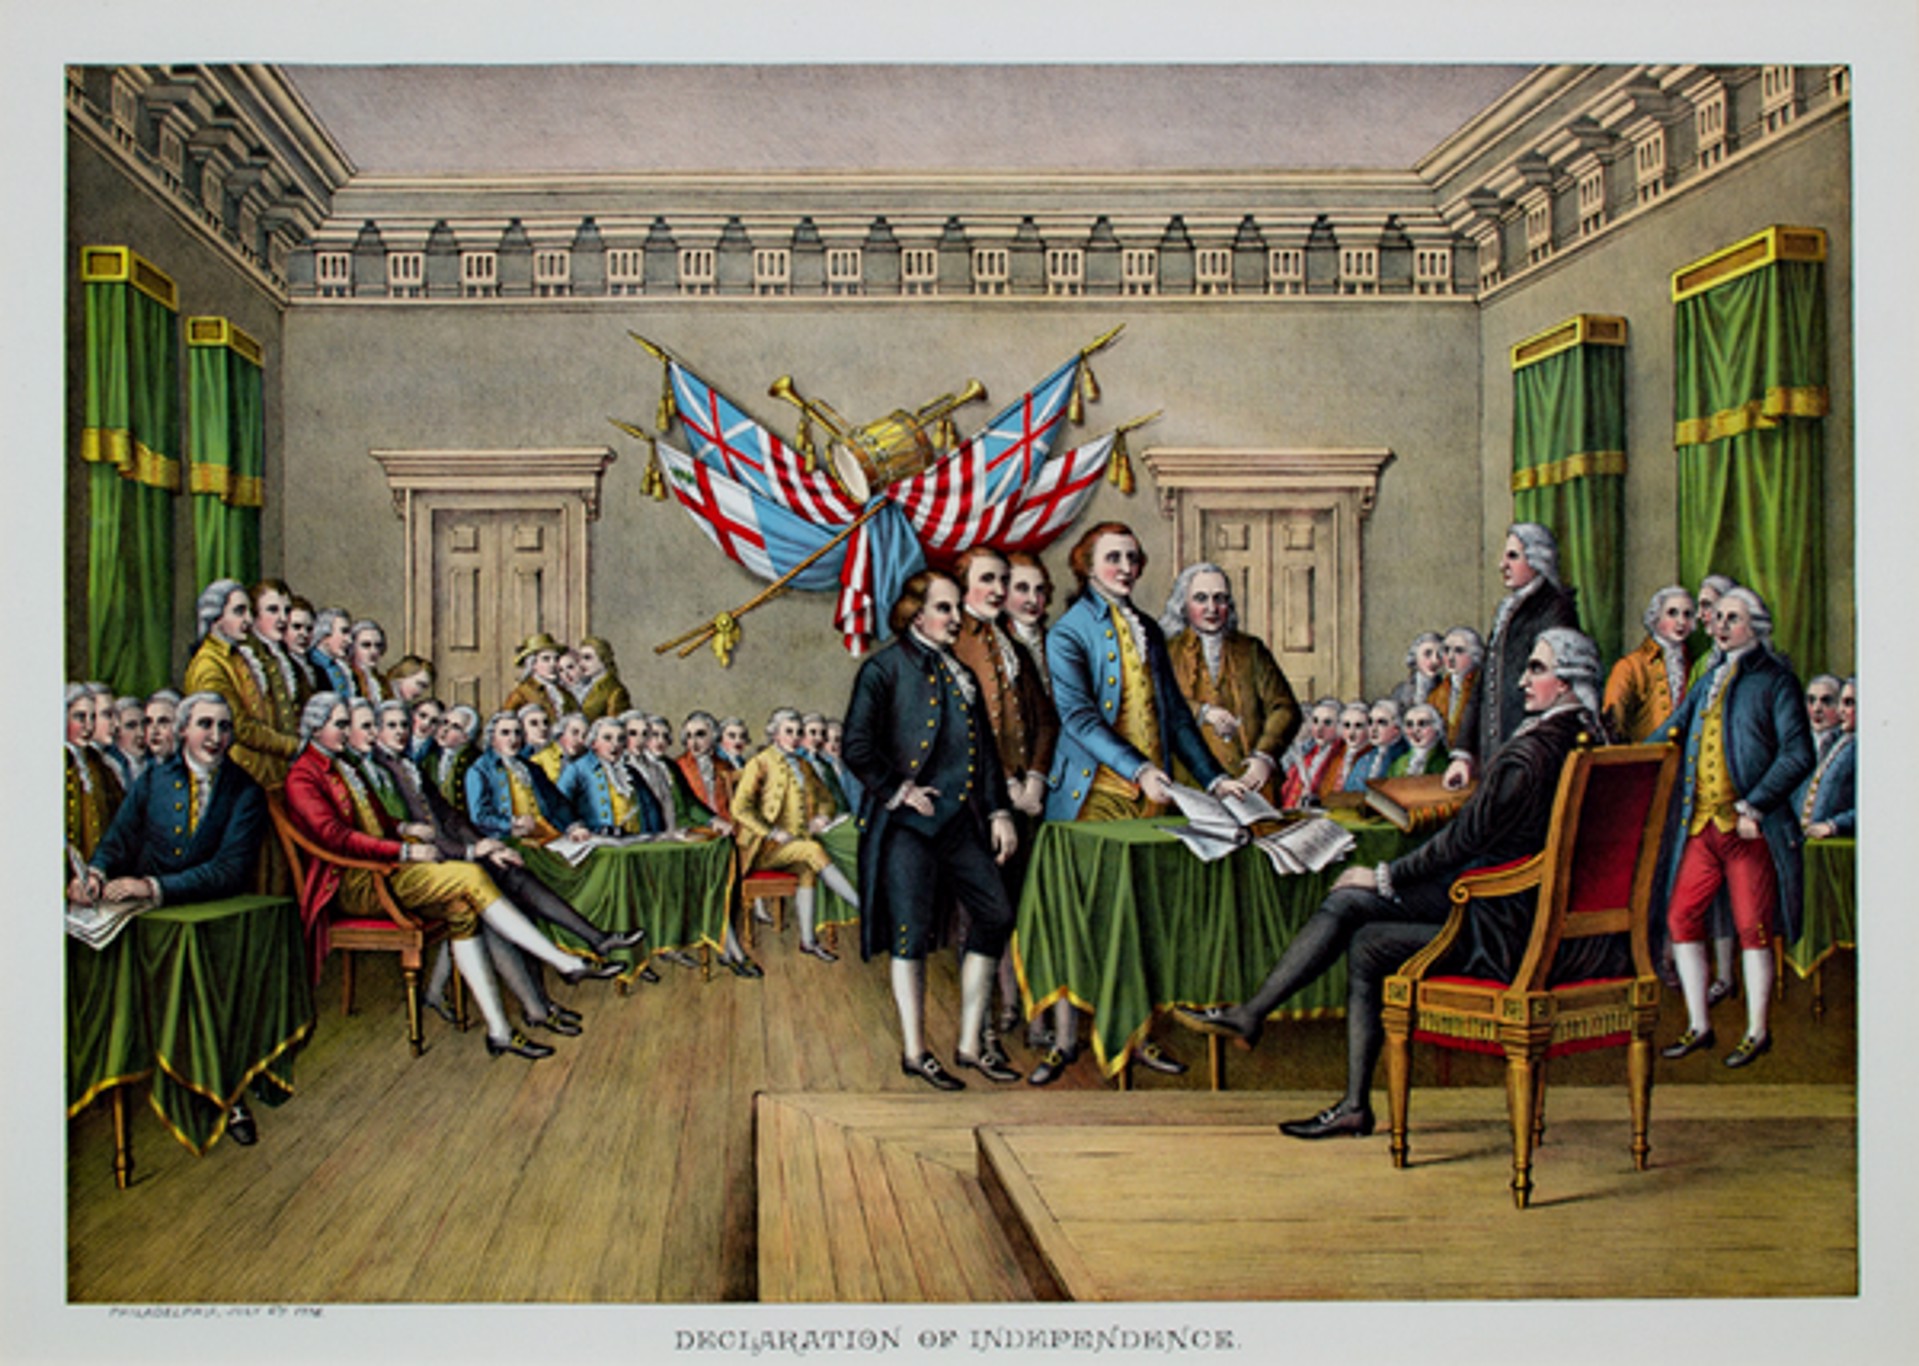 Declaration of Independence by Kurz & Allison